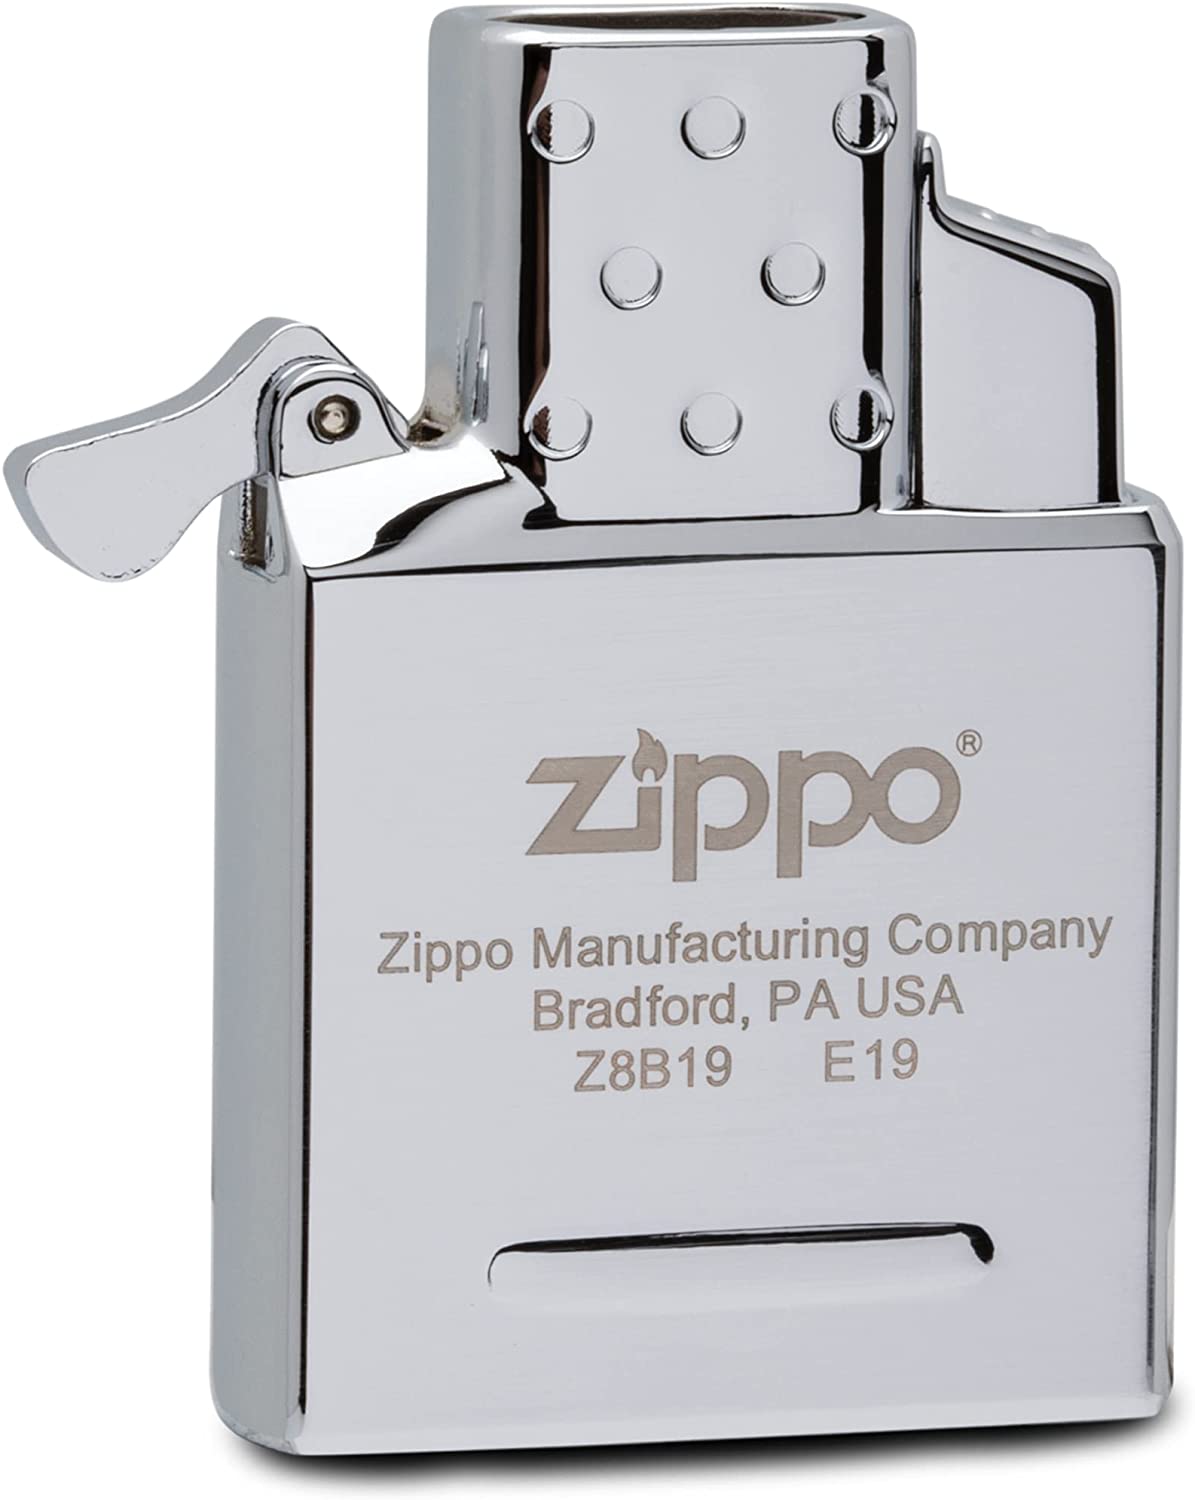 Zippo - 65827 Butane Lighter Insert - Double Torch, Refillable with butane fuel – Pack 1